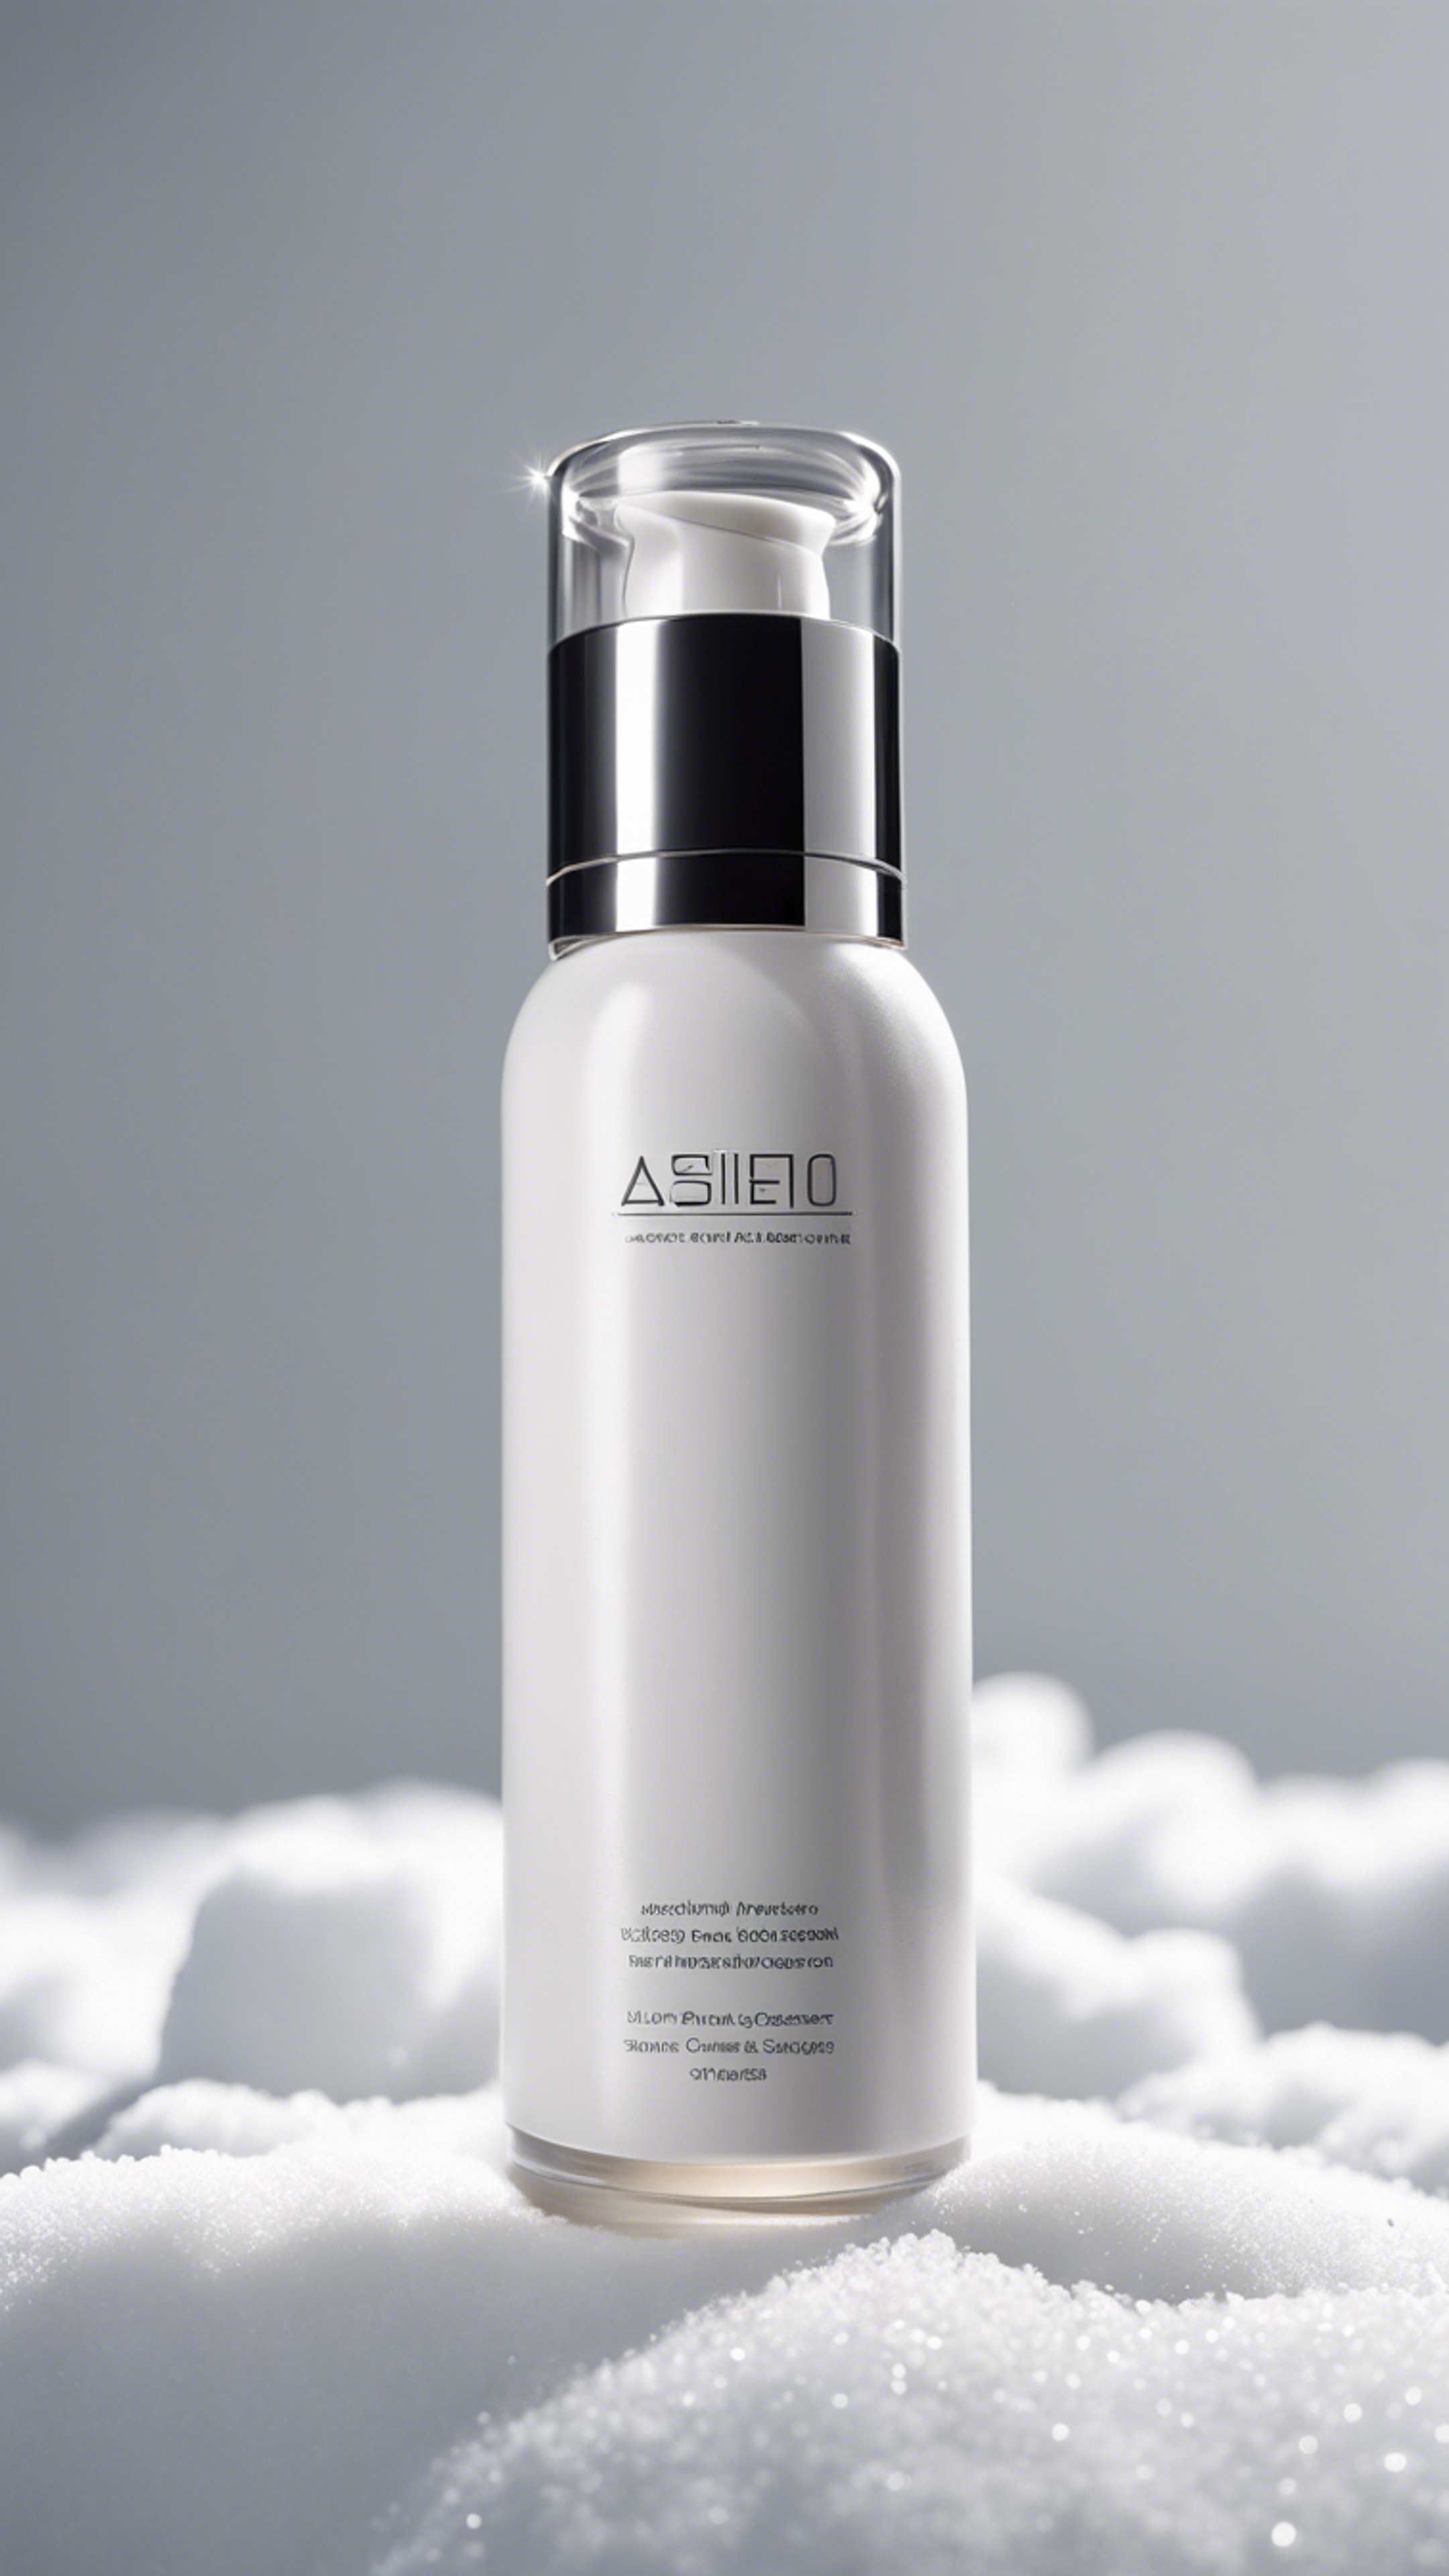 An ultra-modern minimalist skincare bottle standing against a snowy white background. Wallpaper[b1a5dfd34b8b4ed6bae8]